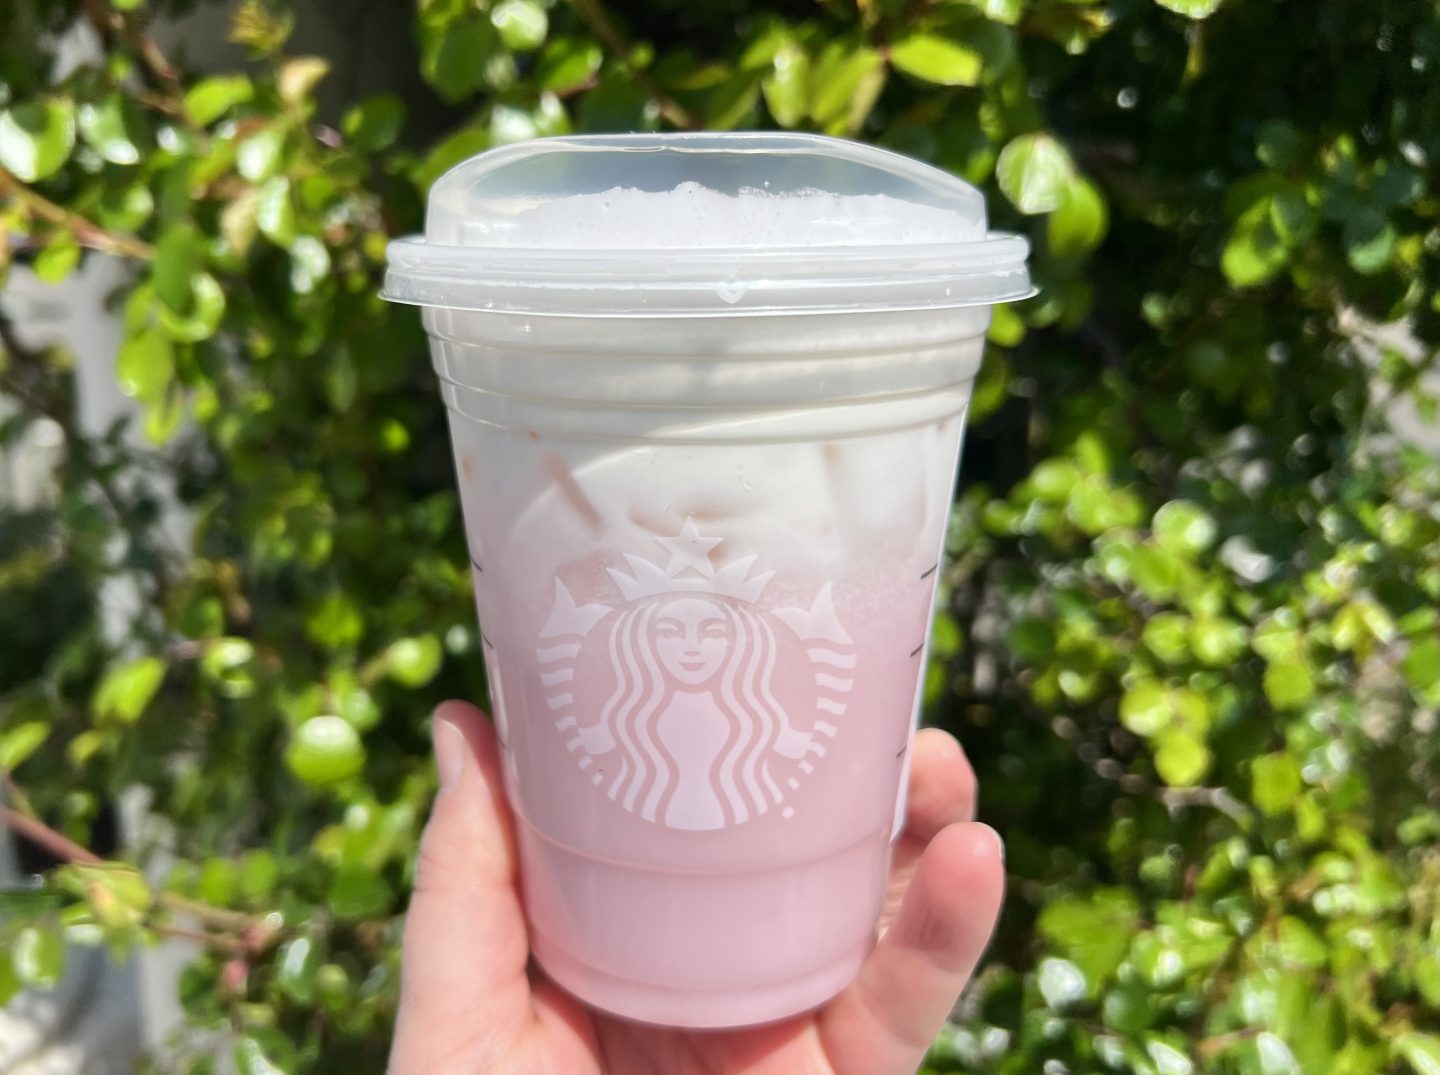 pink drinks at starbucks